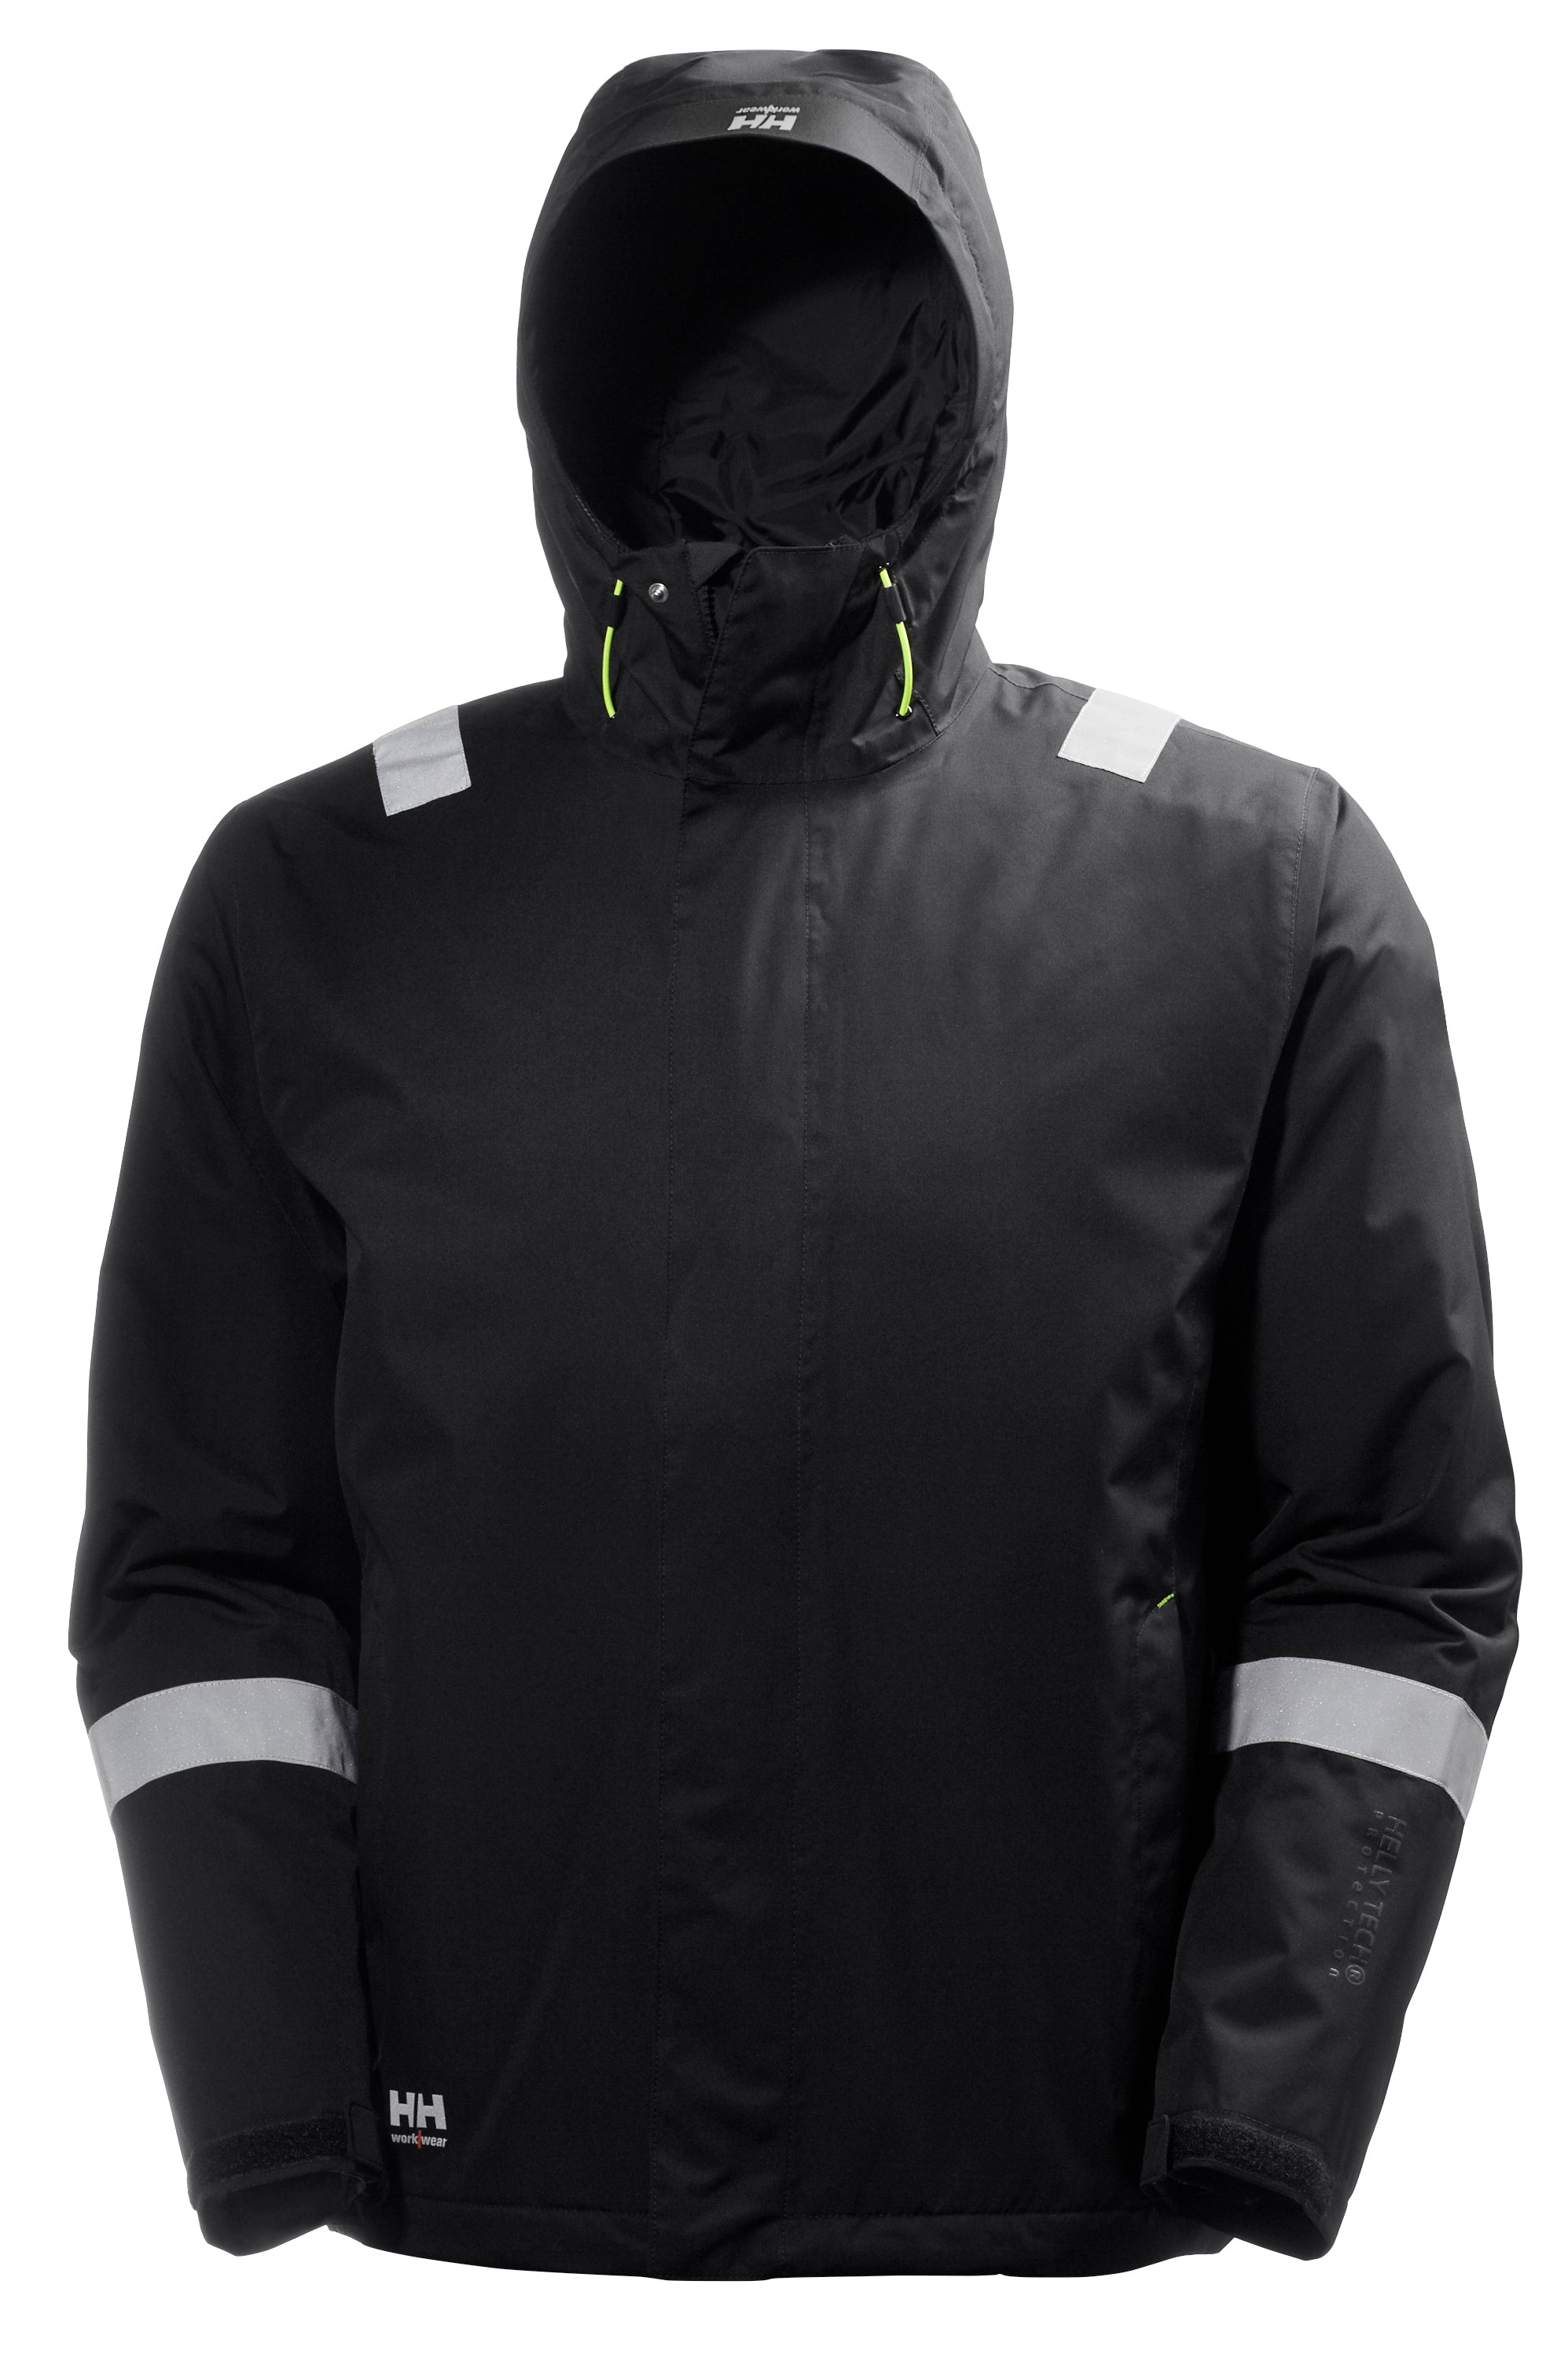 Helly Hansen Work Jacket: Waterproof Windproof Breathable Potsdam  Collection Men's - Western Safety